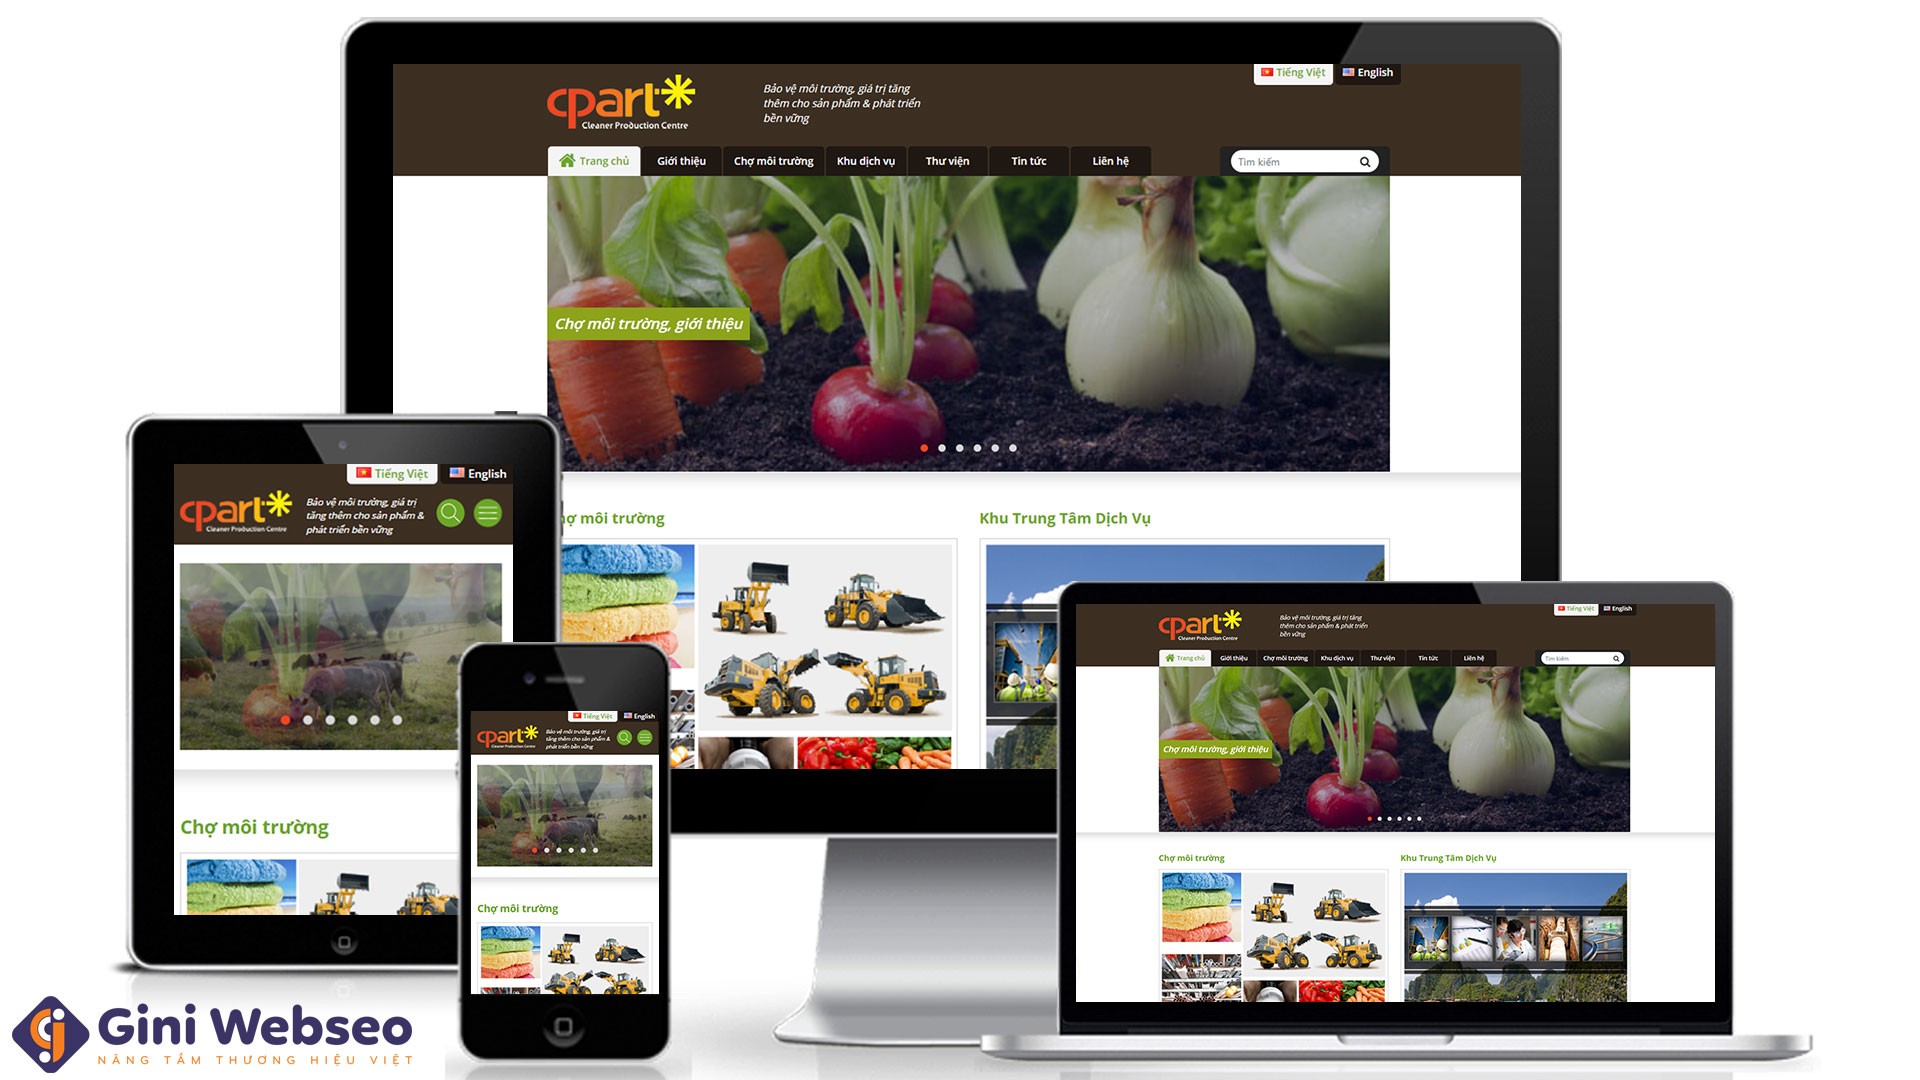 Thiết kế website sản xuất sạch Cpart